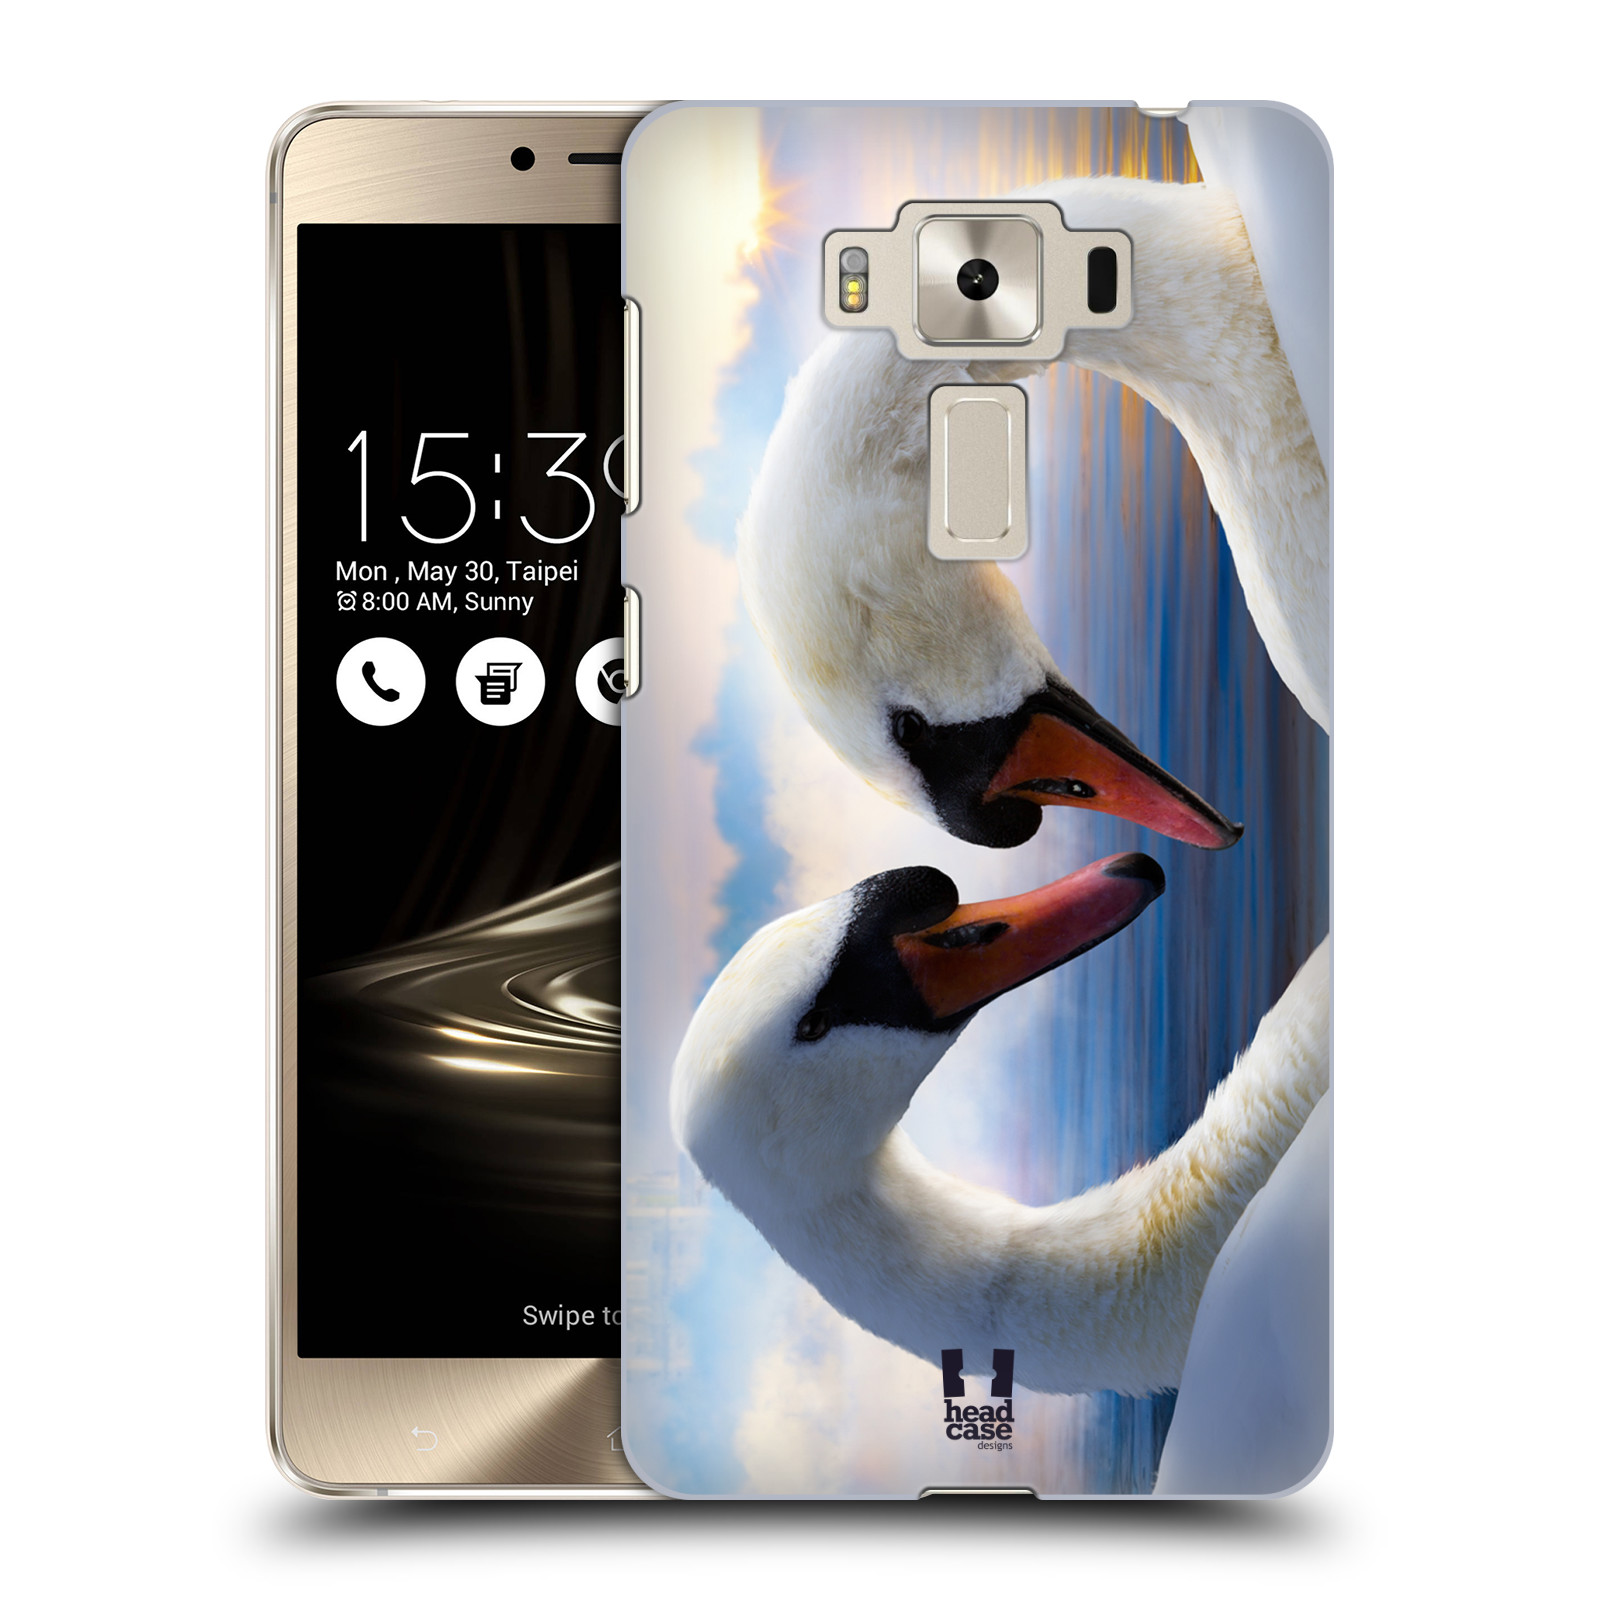 HEAD CASE plastový obal na mobil Asus Zenfone 3 DELUXE ZS550KL vzor Divočina, Divoký život a zvířata foto ZAMILOVANÉ LABUTĚ, LÁSKA